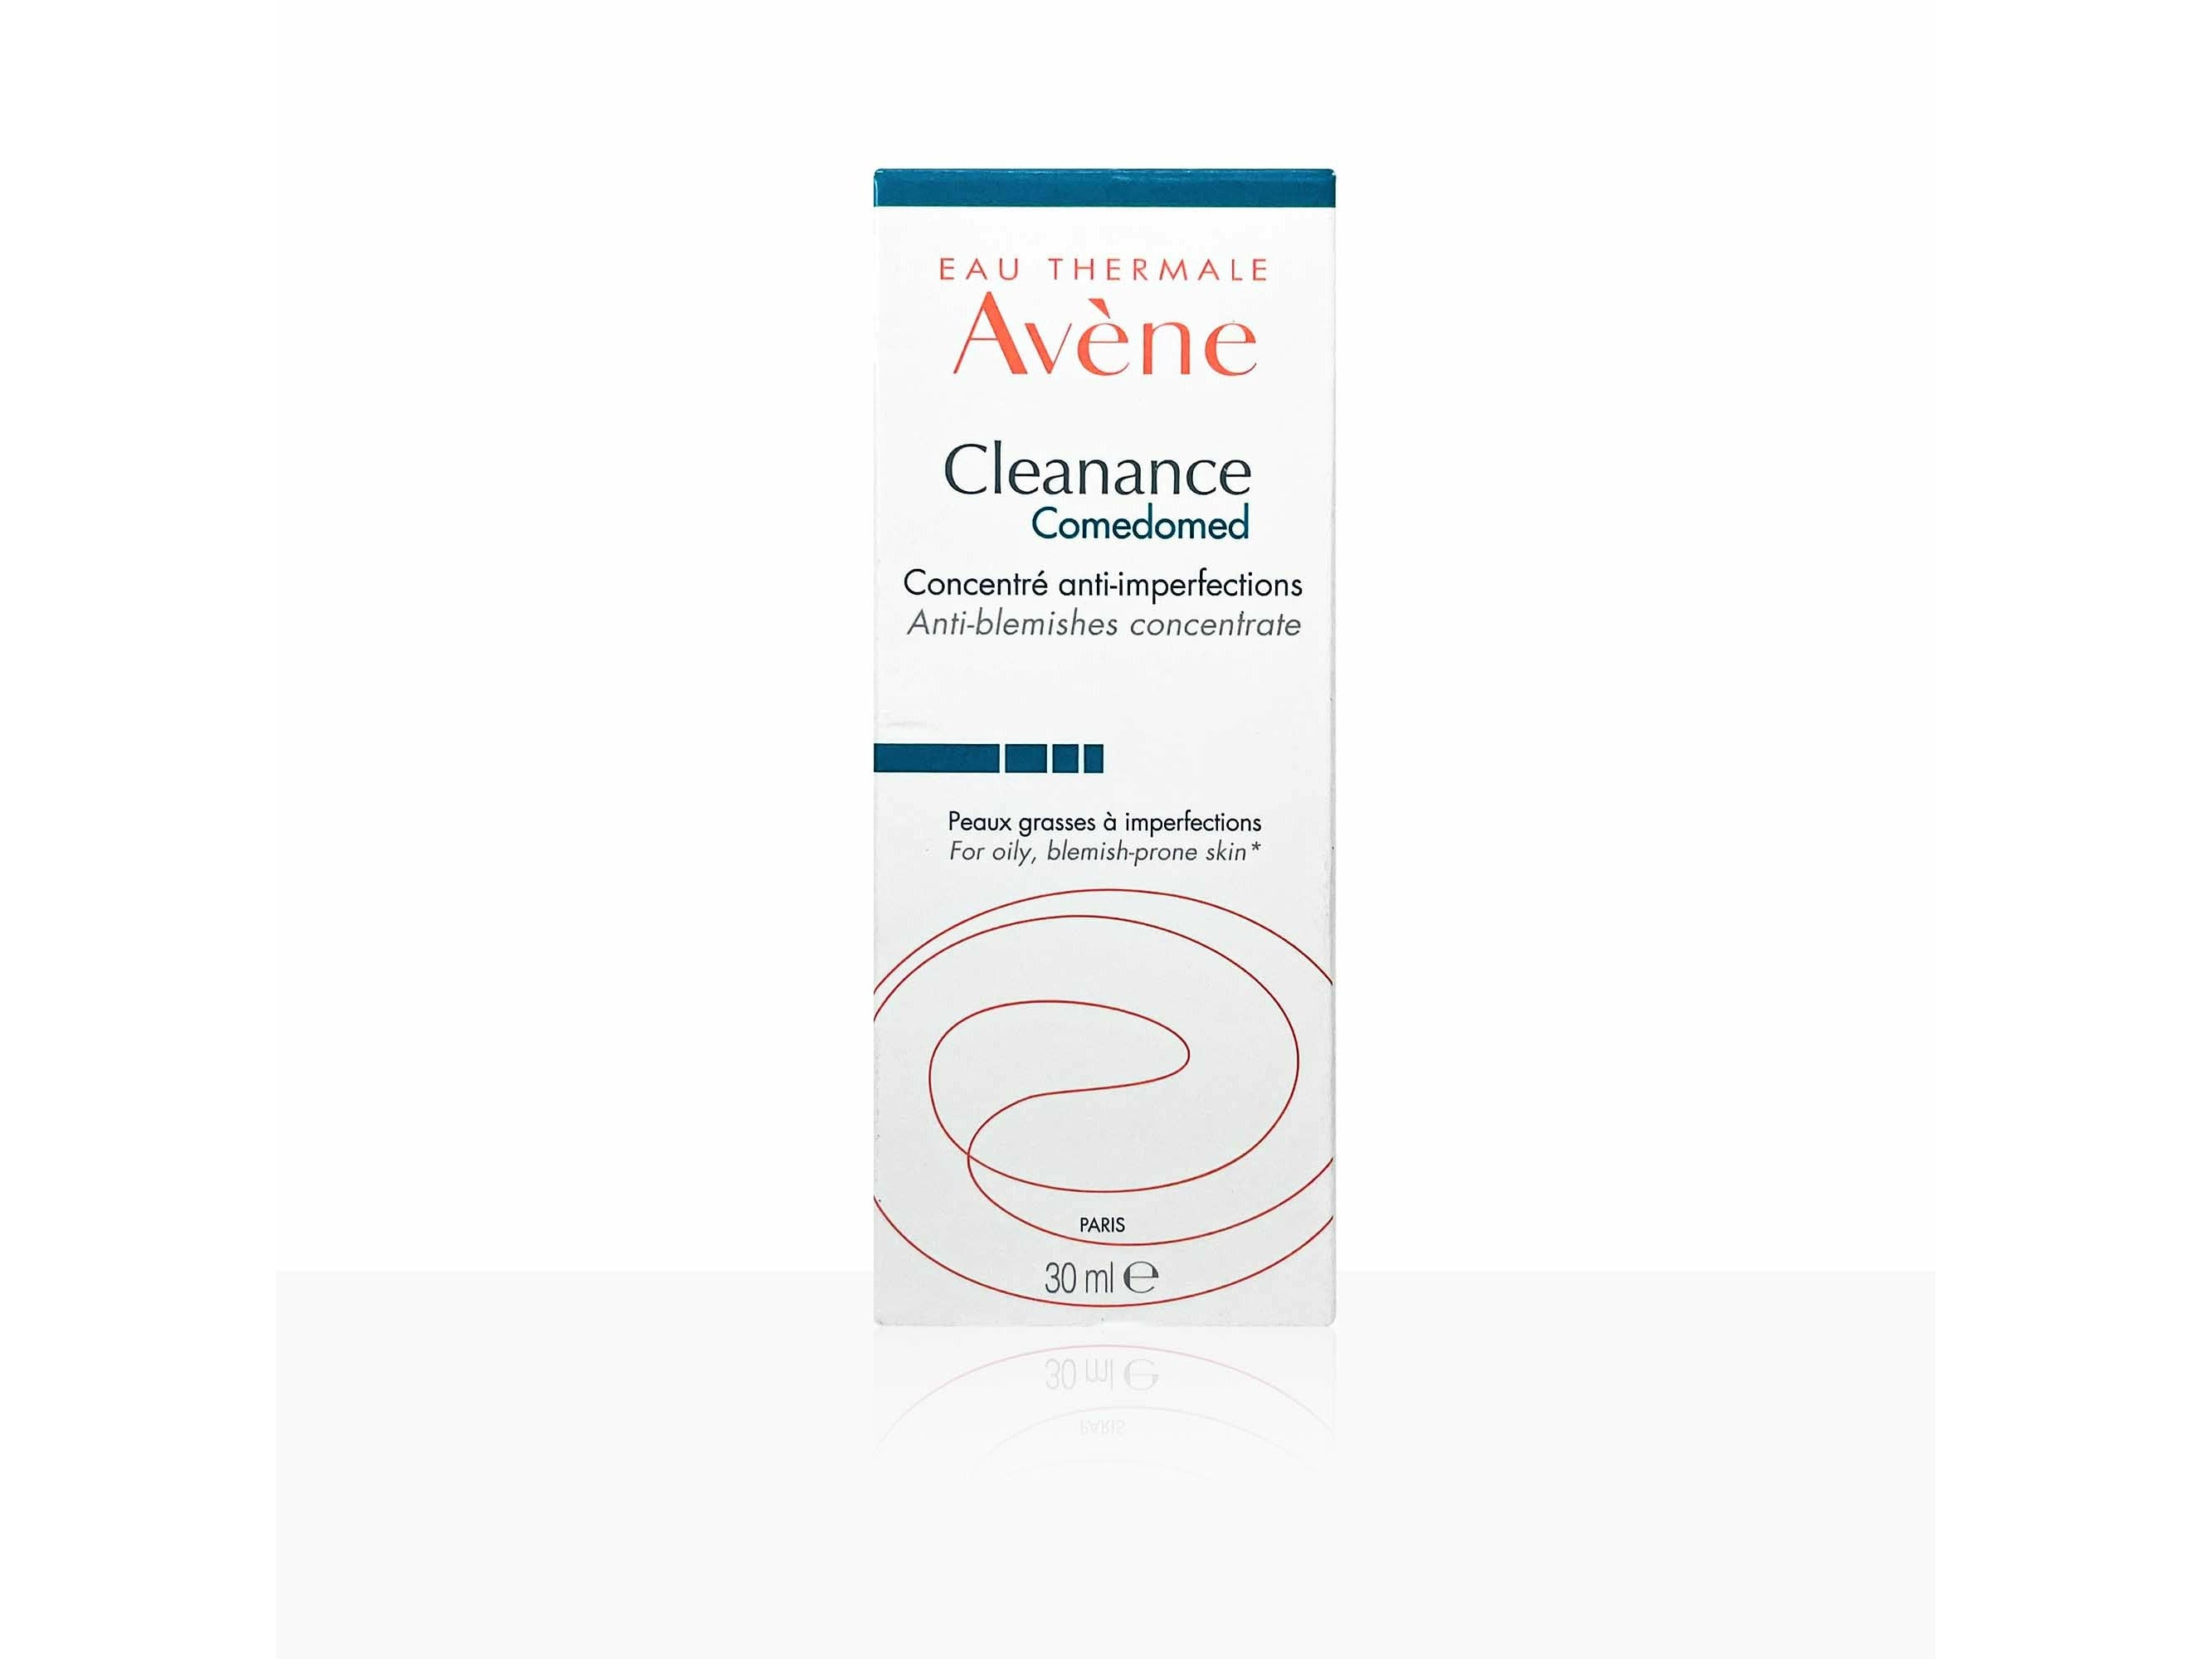 Avene Cleanance Comedomed - Clinikally